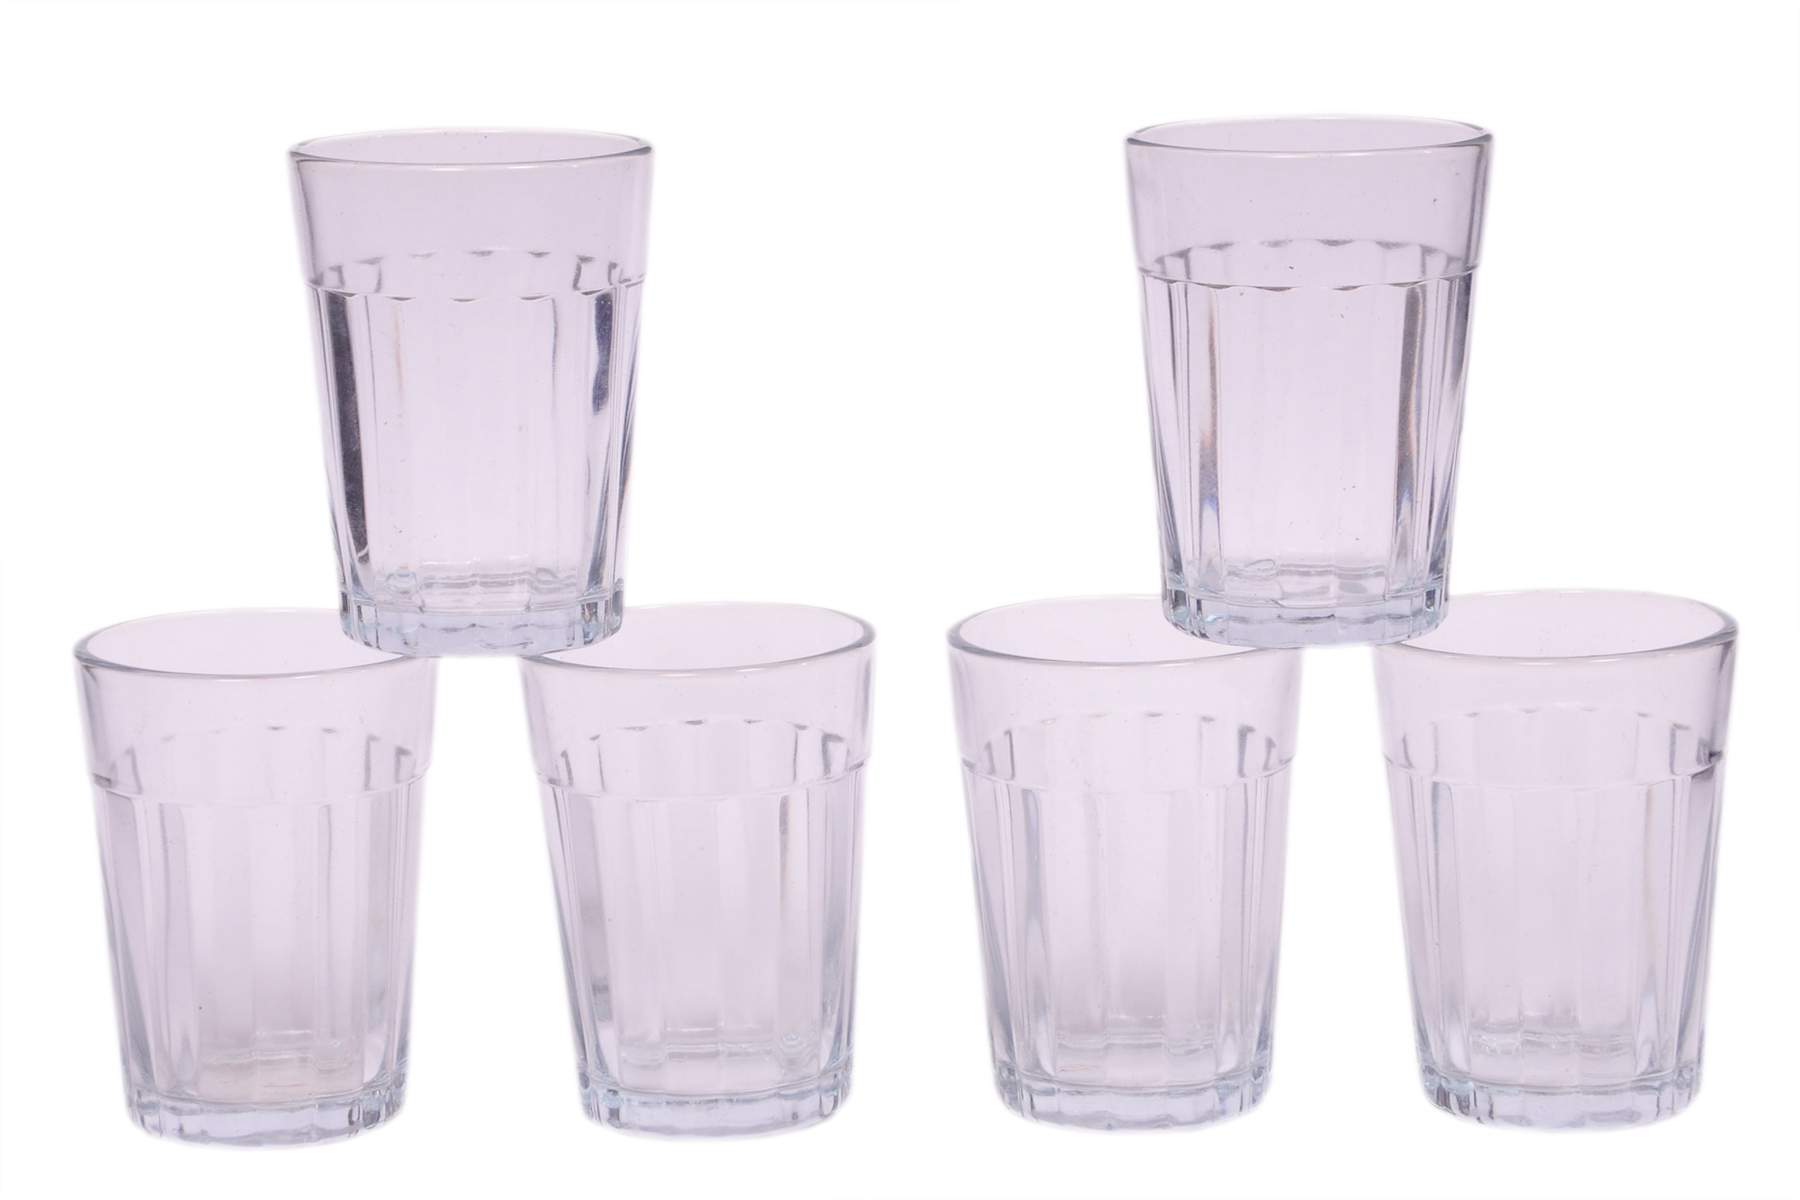 Stylish And Designer Multipurpose Drinking Glass, Transparent, Pack Of 6